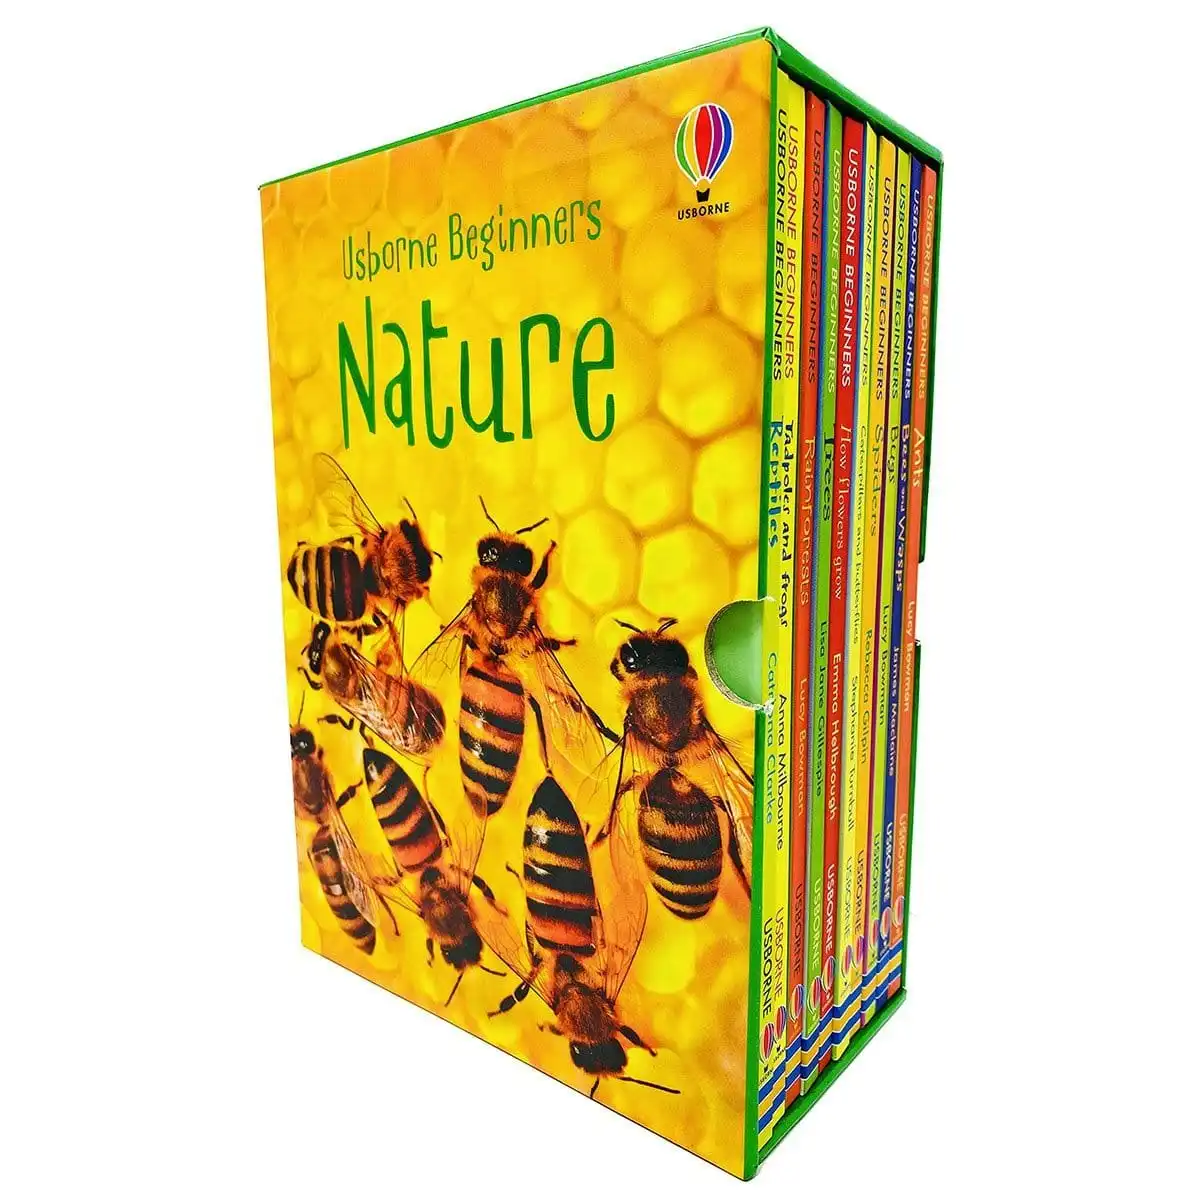 Usborne Beginners Nature - 10 Copy Box Set